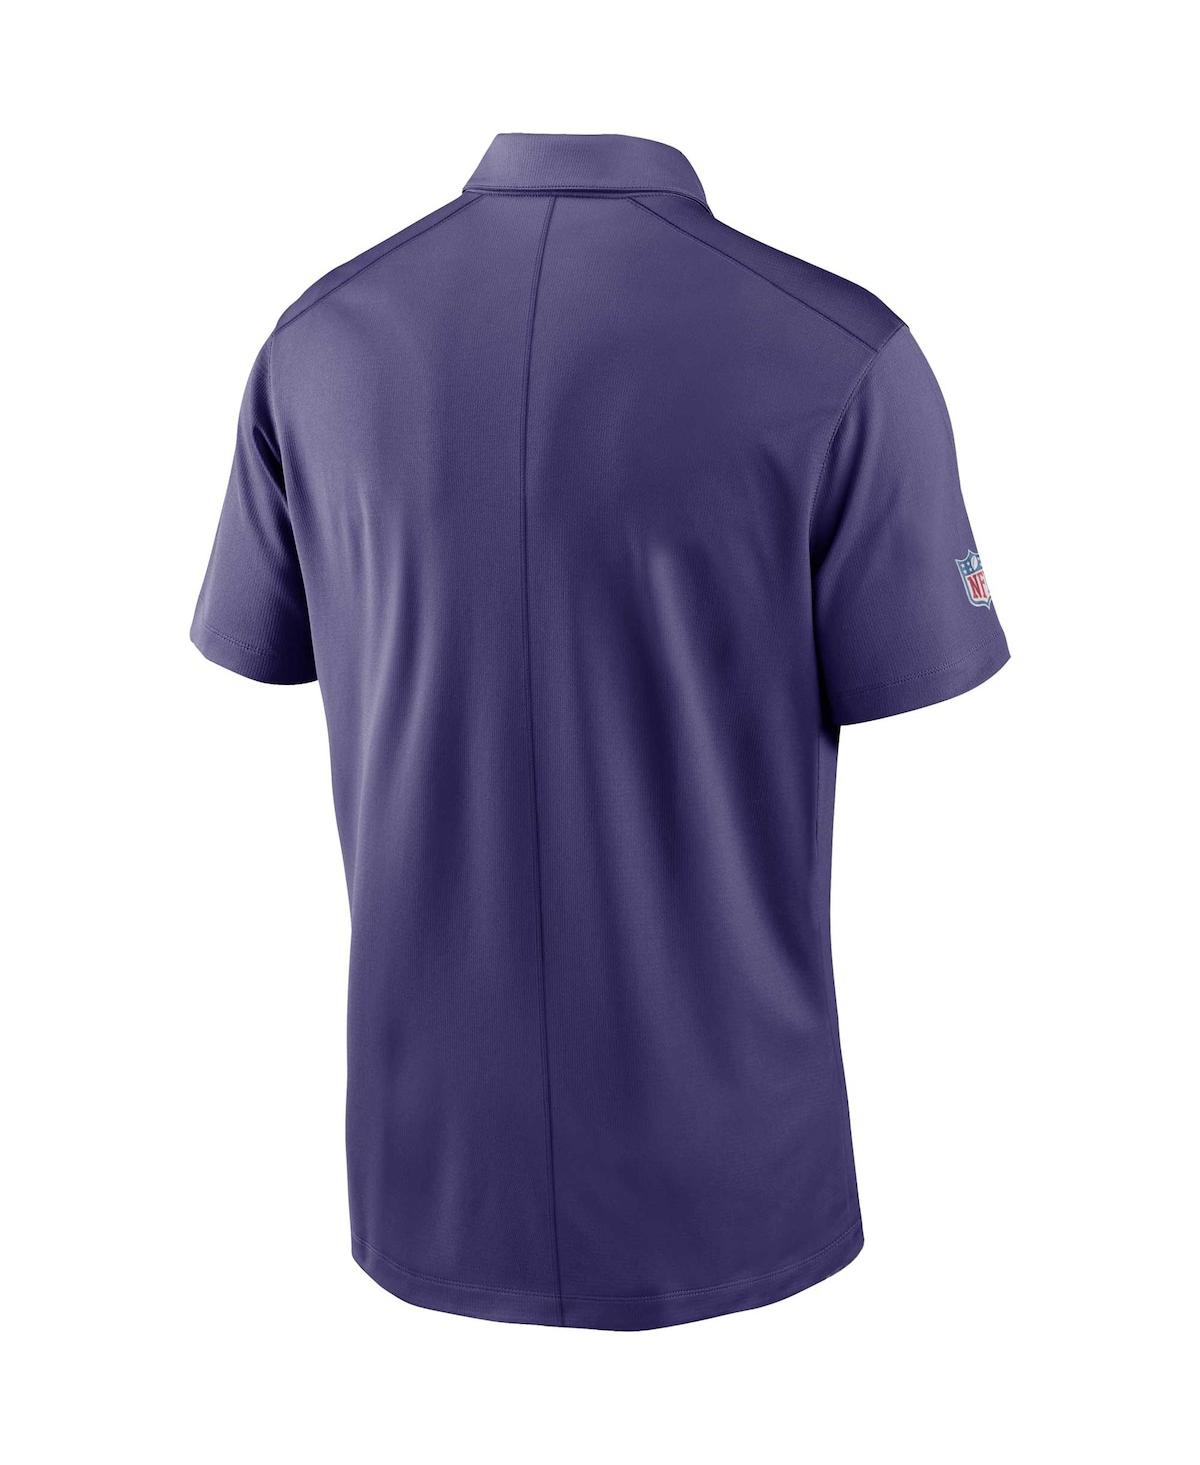 Shop Nike Men's  Purple Baltimore Ravens Sideline Victory Performance Polo Shirt